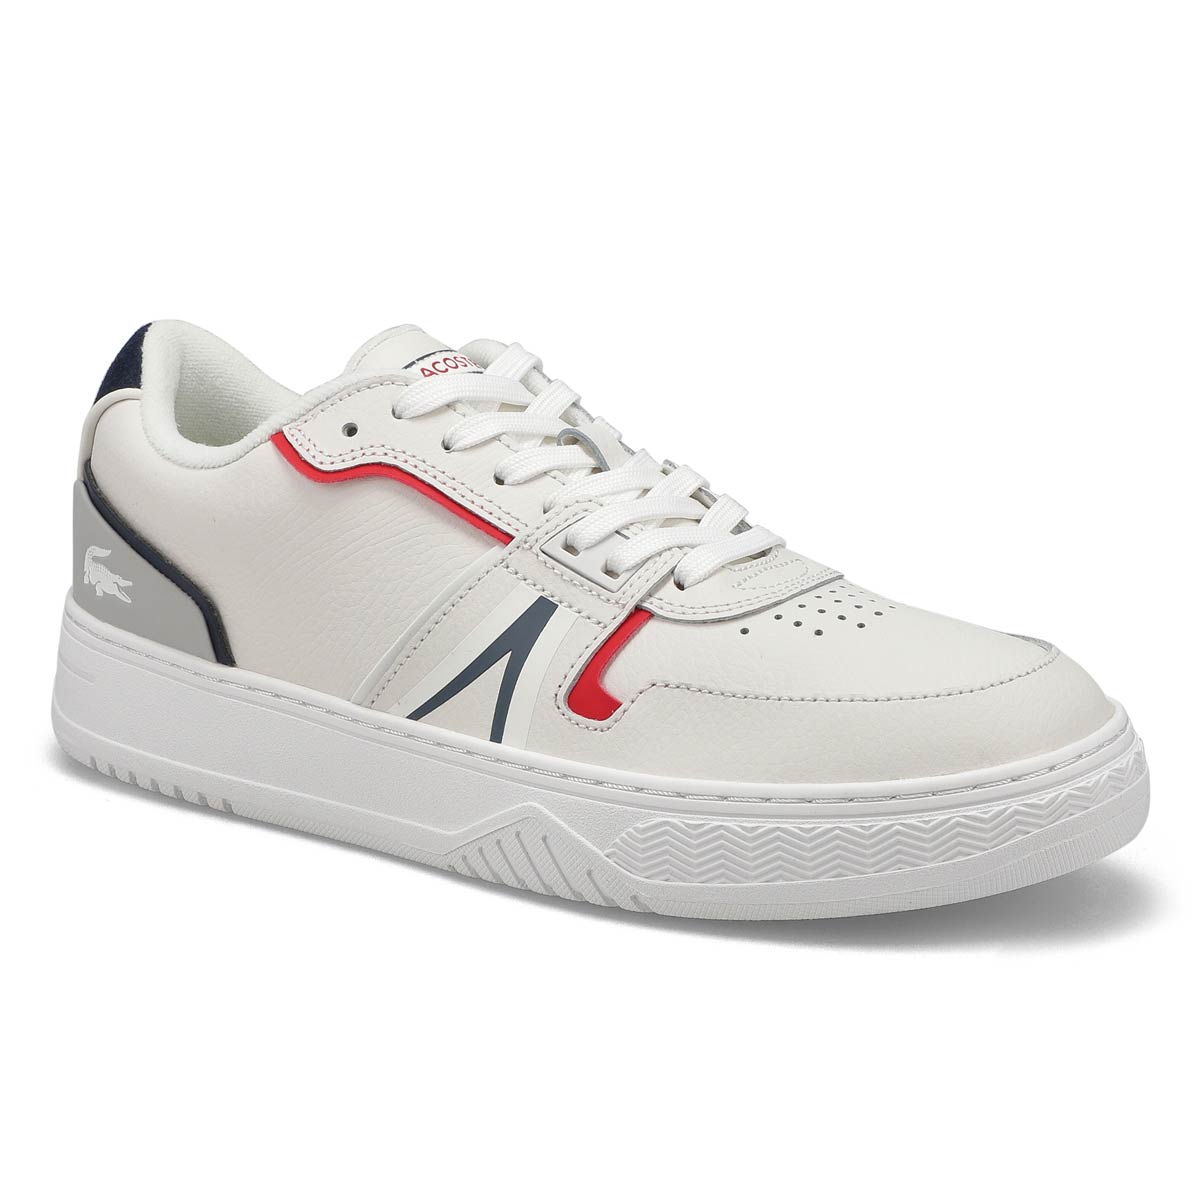 Lacoste Men's L001 Fashion Sneaker - White/Na | SoftMoc.com